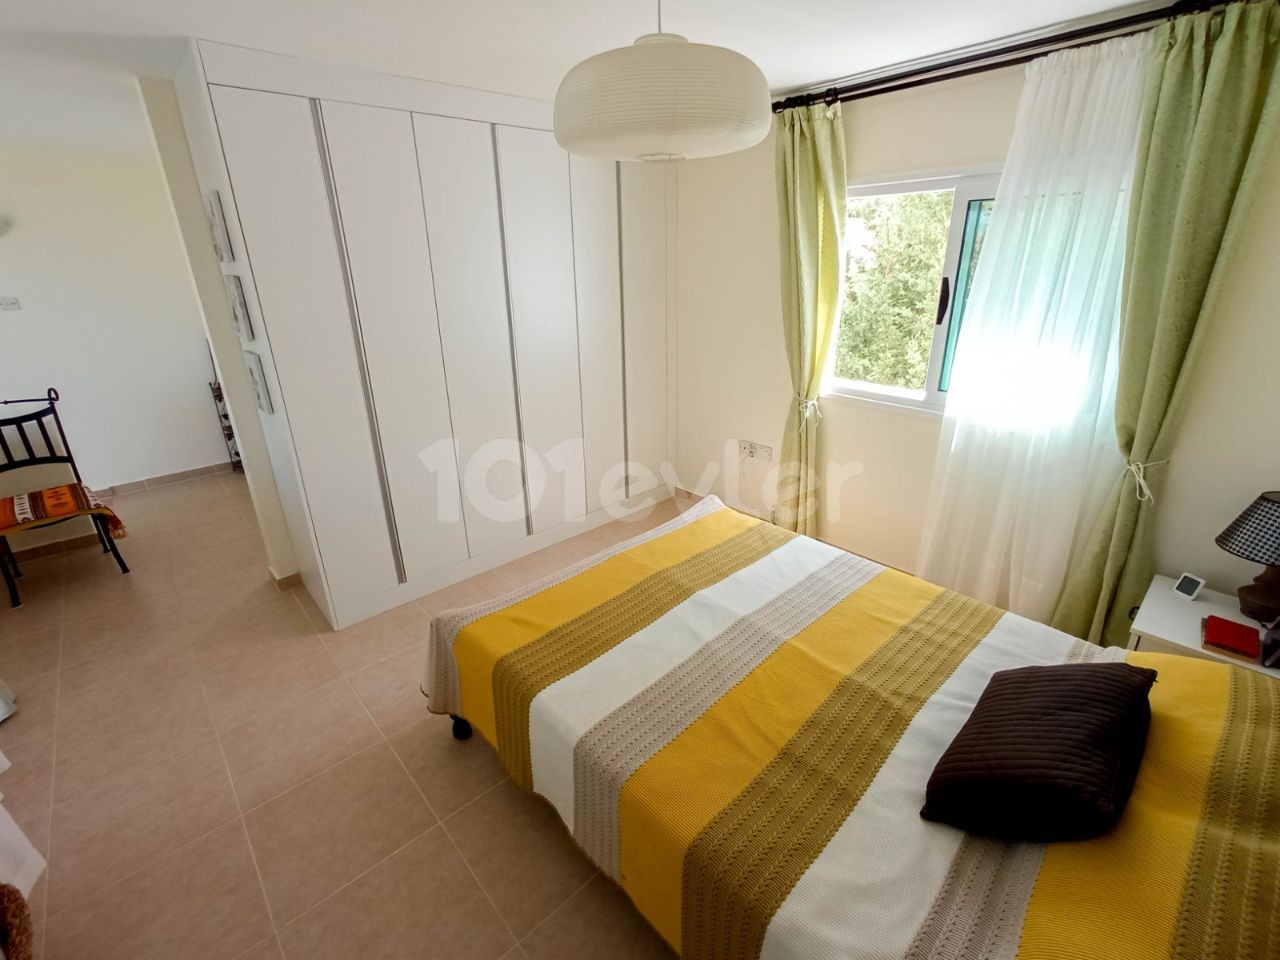 Beautifully presented 2 bedroom duple Llogara apartment on this an Llogara Llogara Website ** 